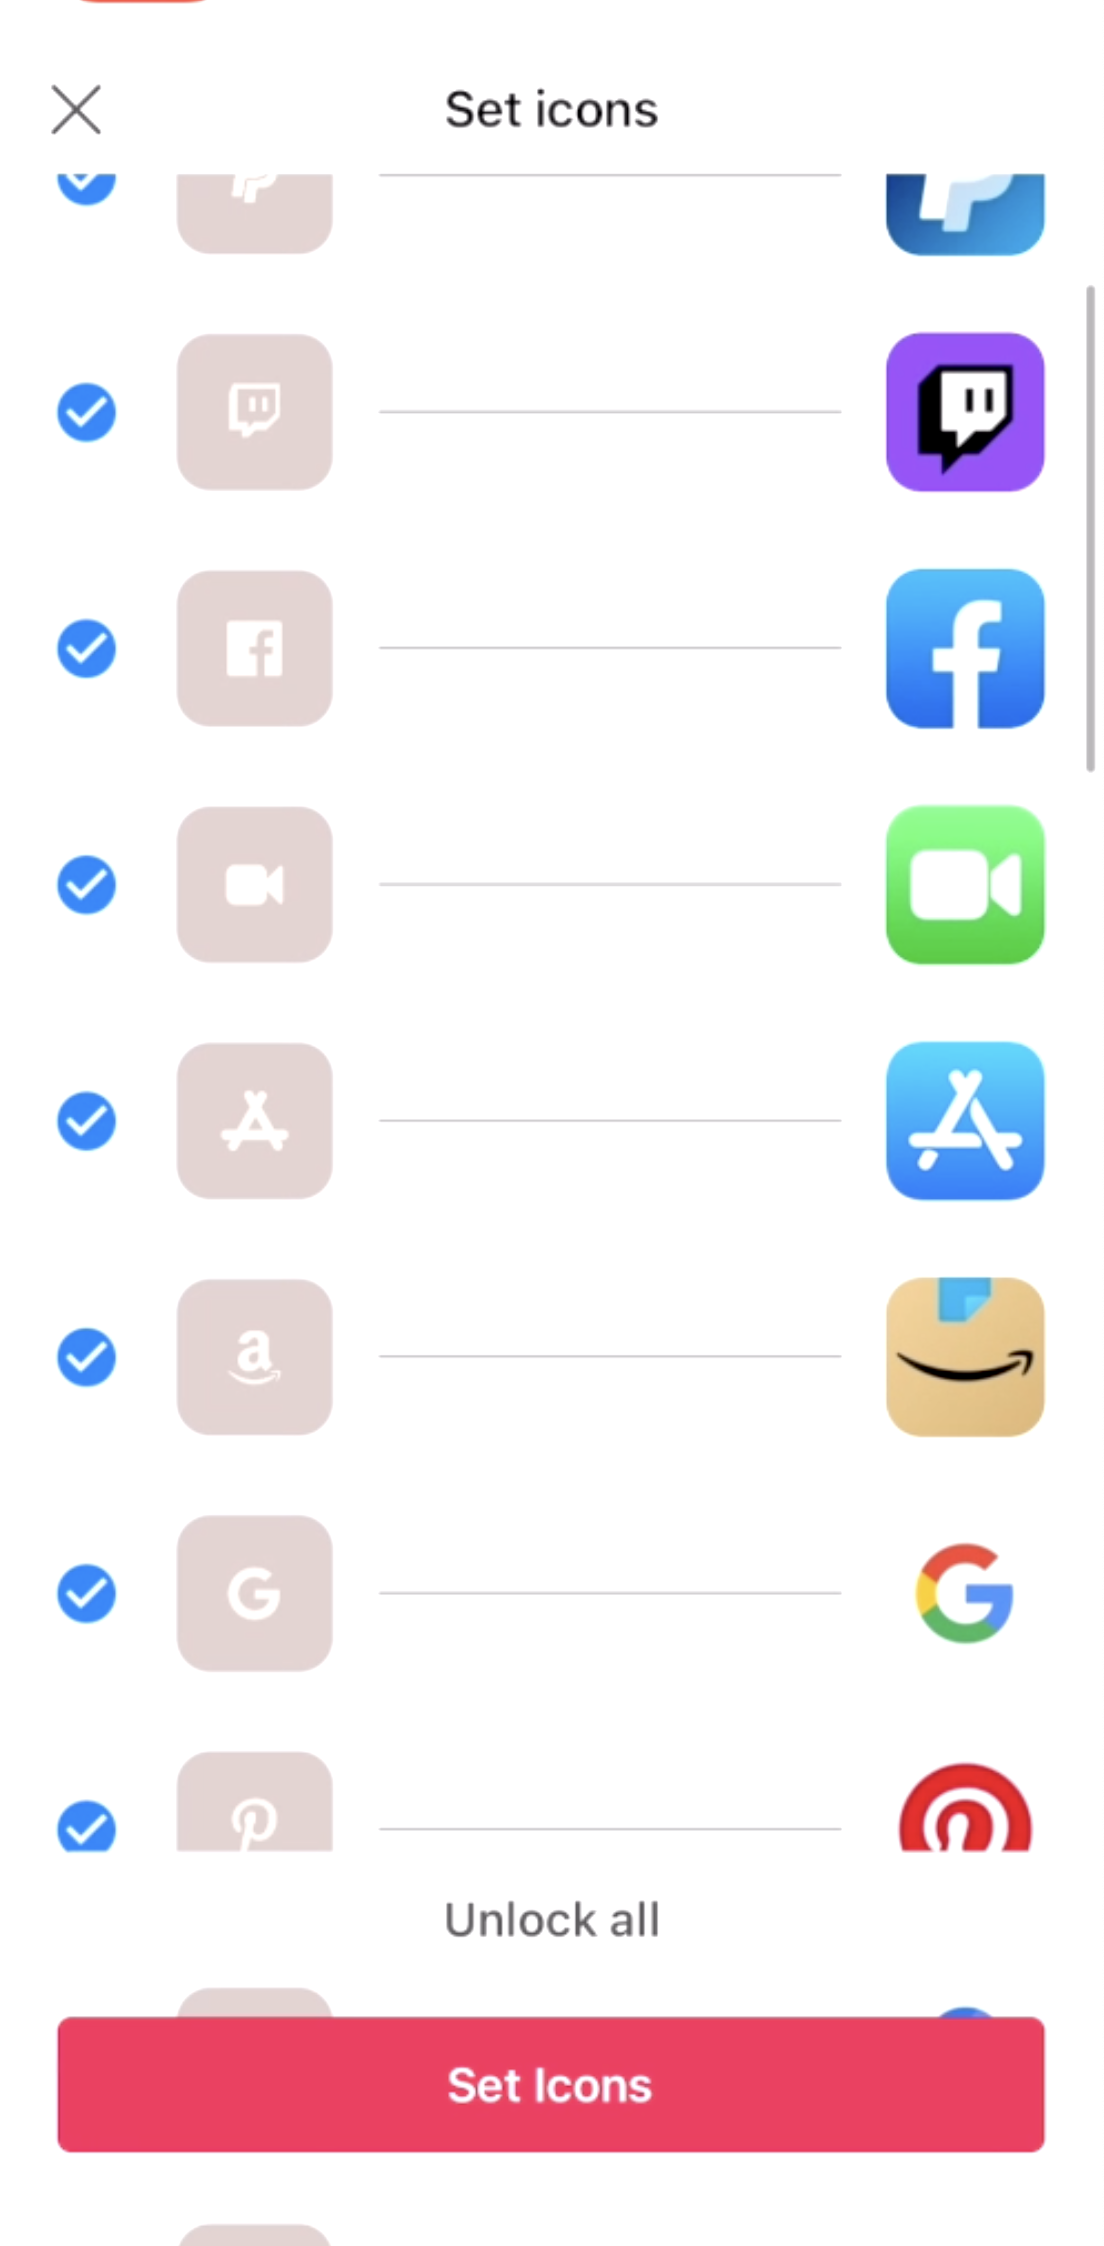 #4 image of [iOS]How to change the app icons via WidgetClub theme?